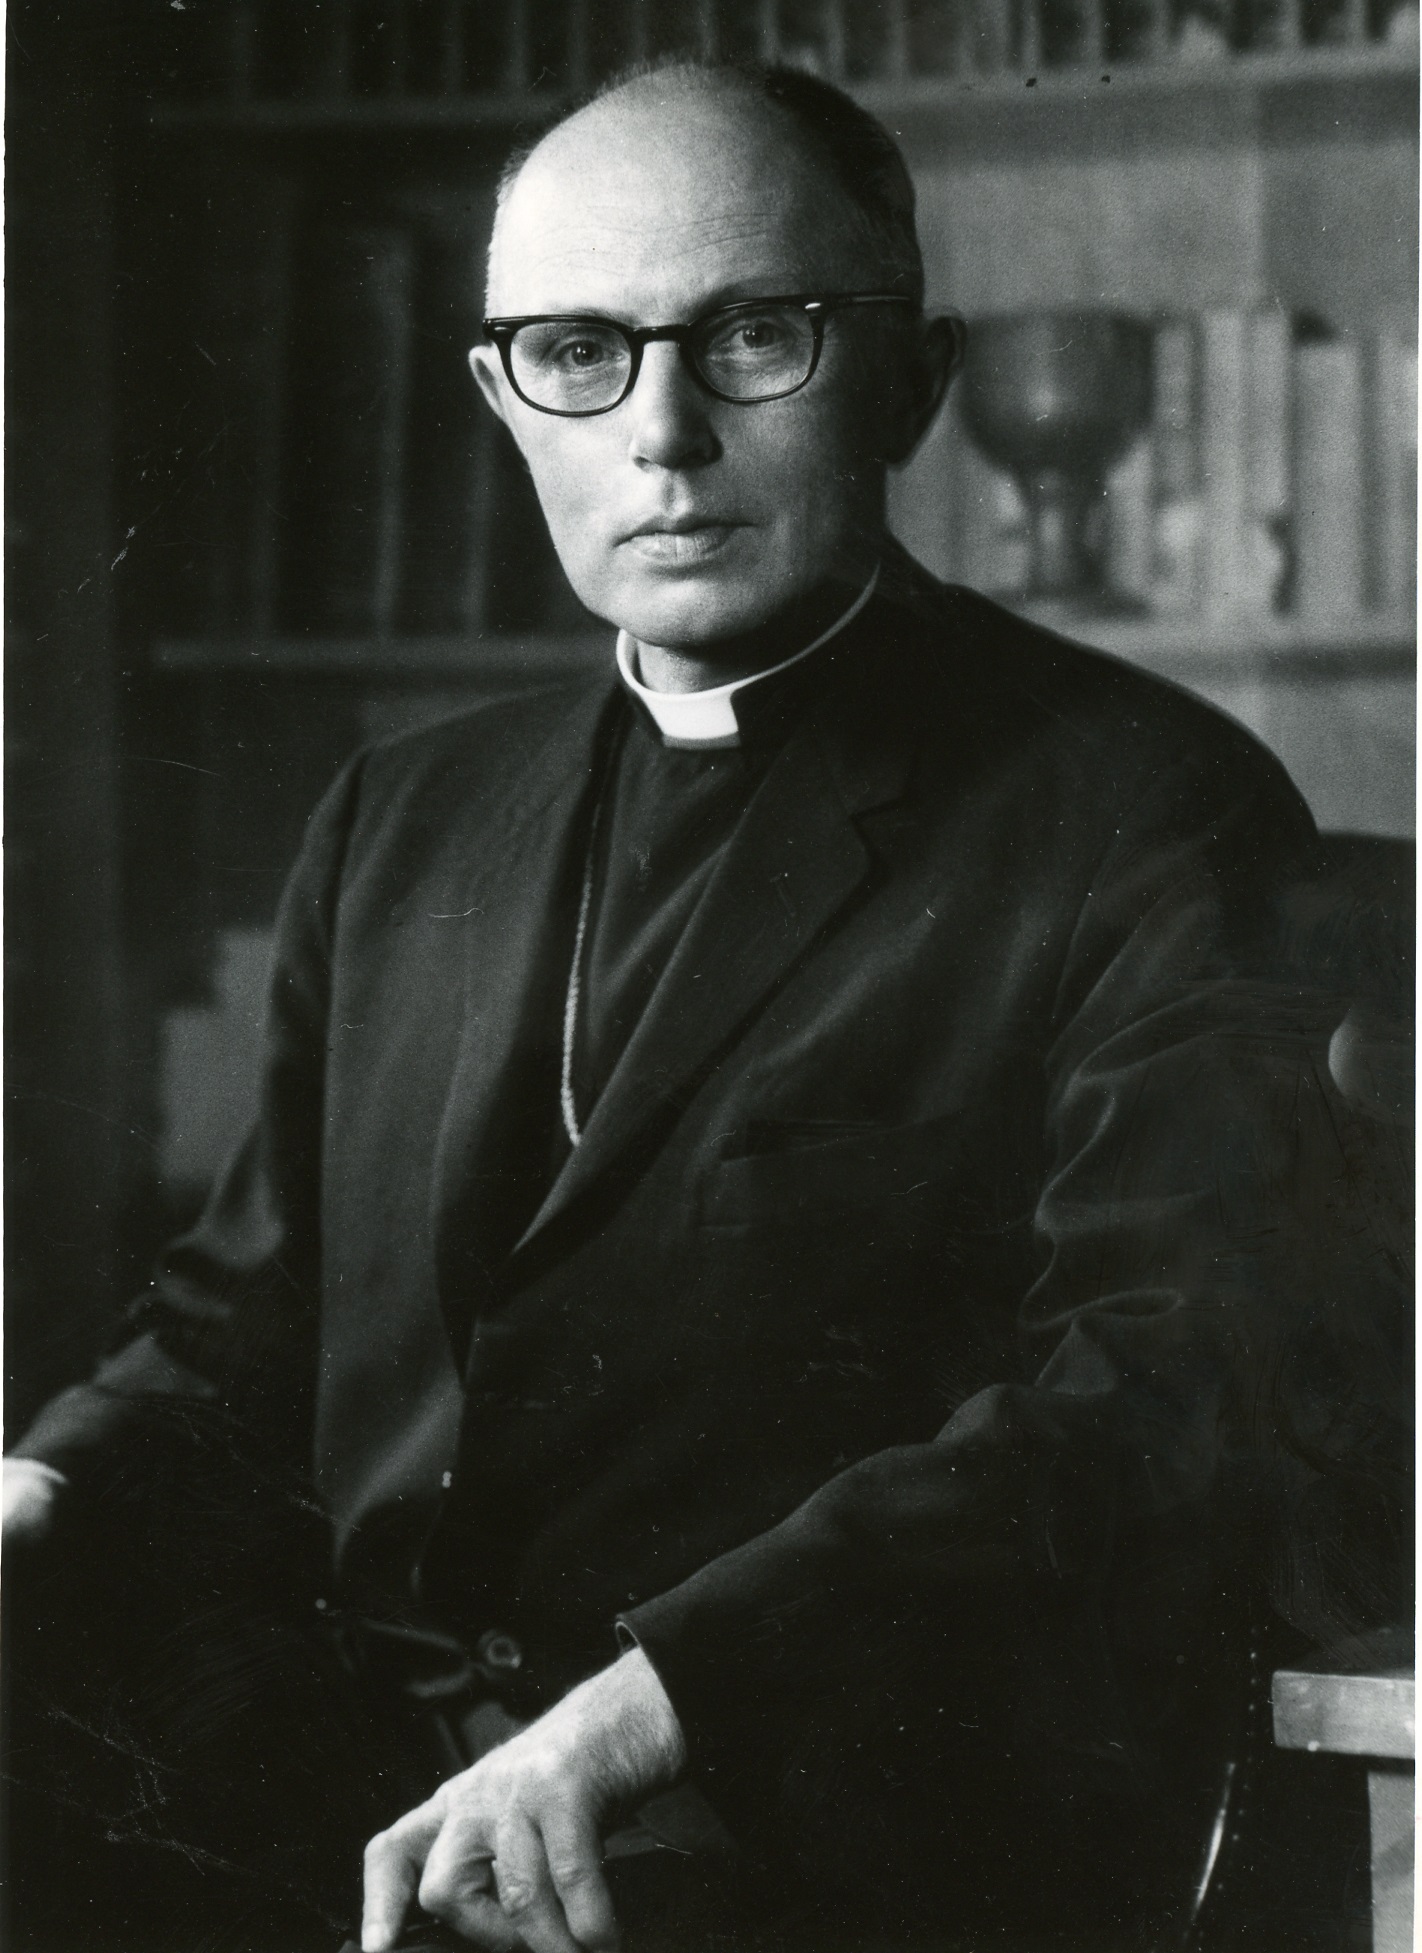 The Rt. Rev. Walter Conrad Klein